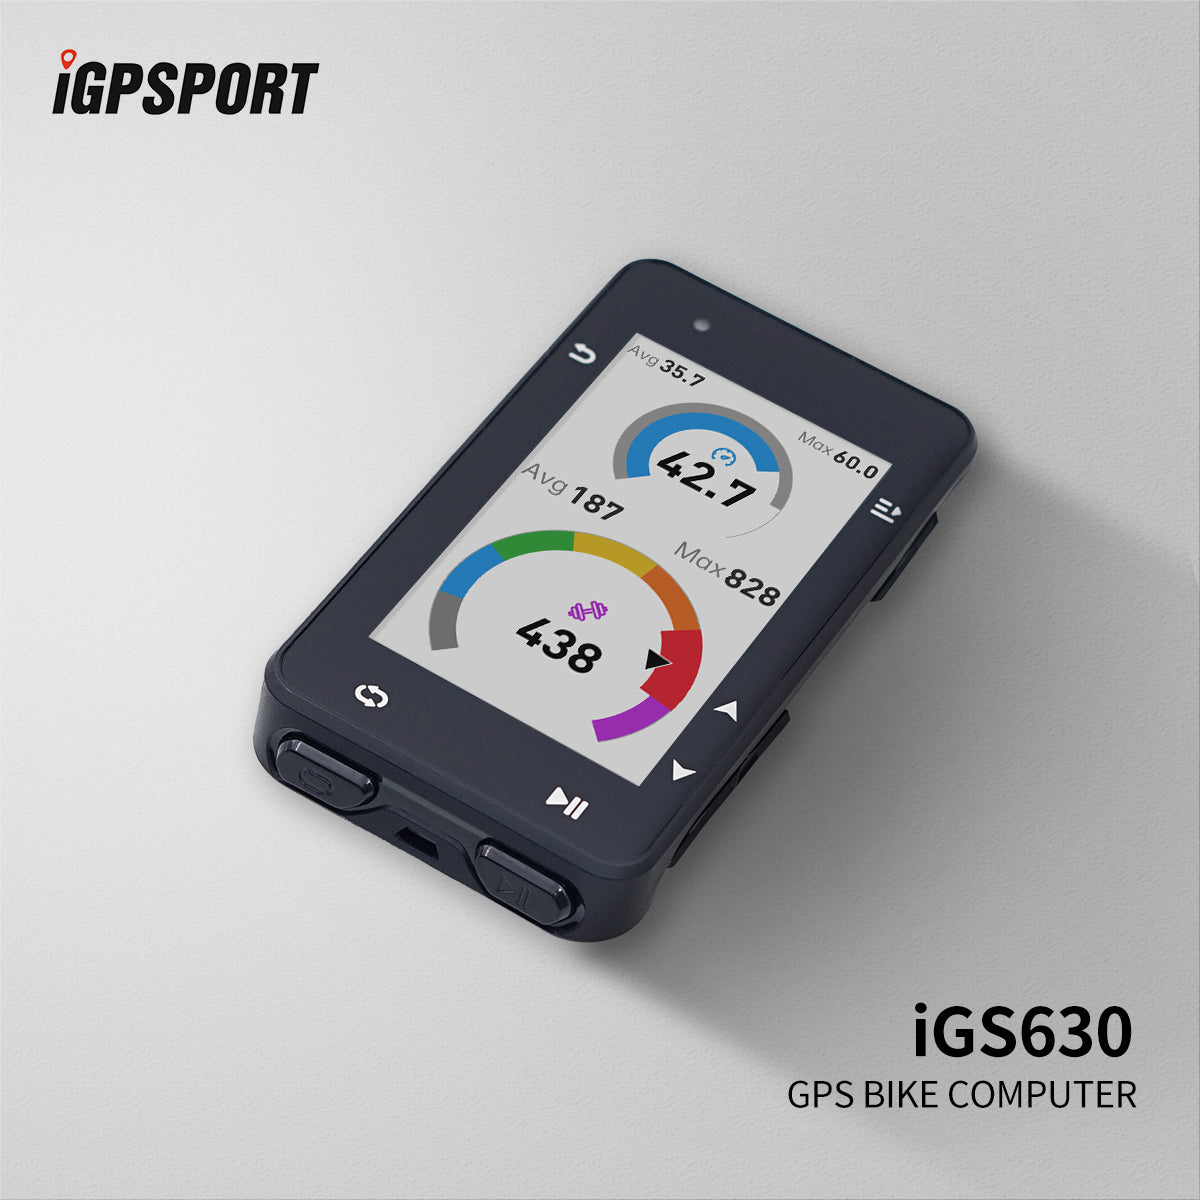 iGPSPORT iGS630 GPS BIKE COMPUTER